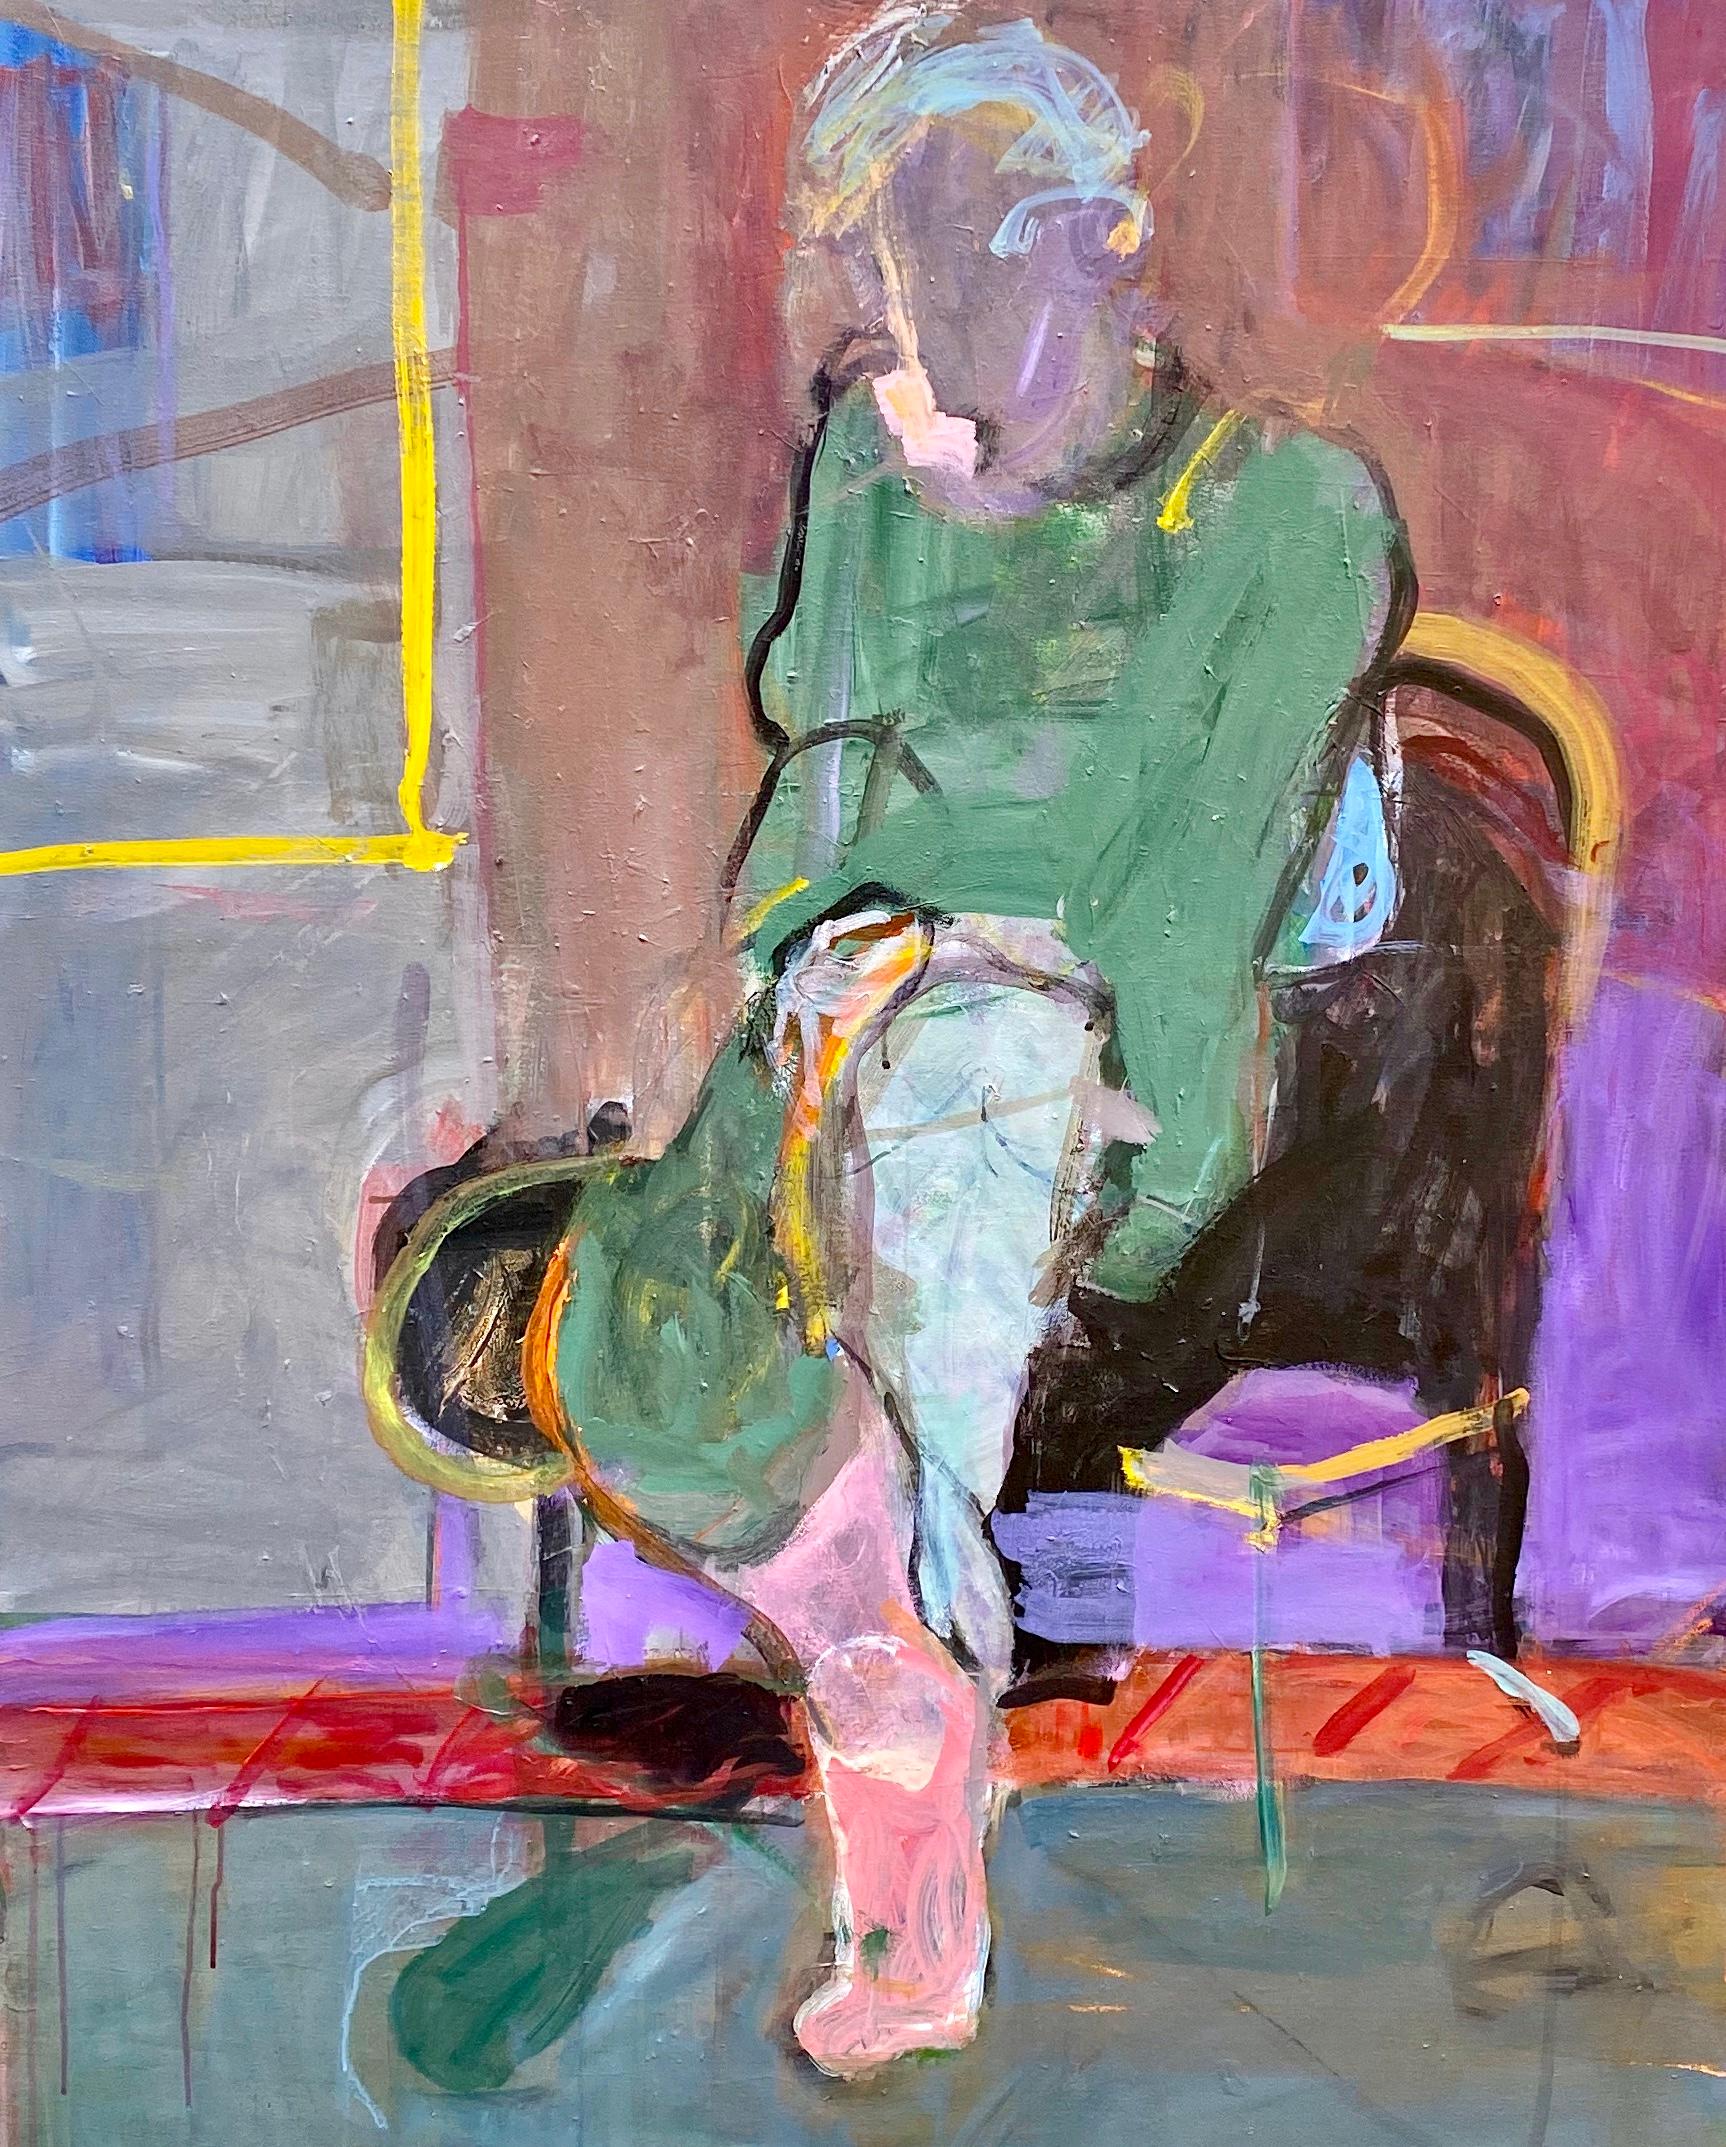 Abstract Painting Ilana Seati - Peinture figurative abstraite expressive aux couleurs pastel